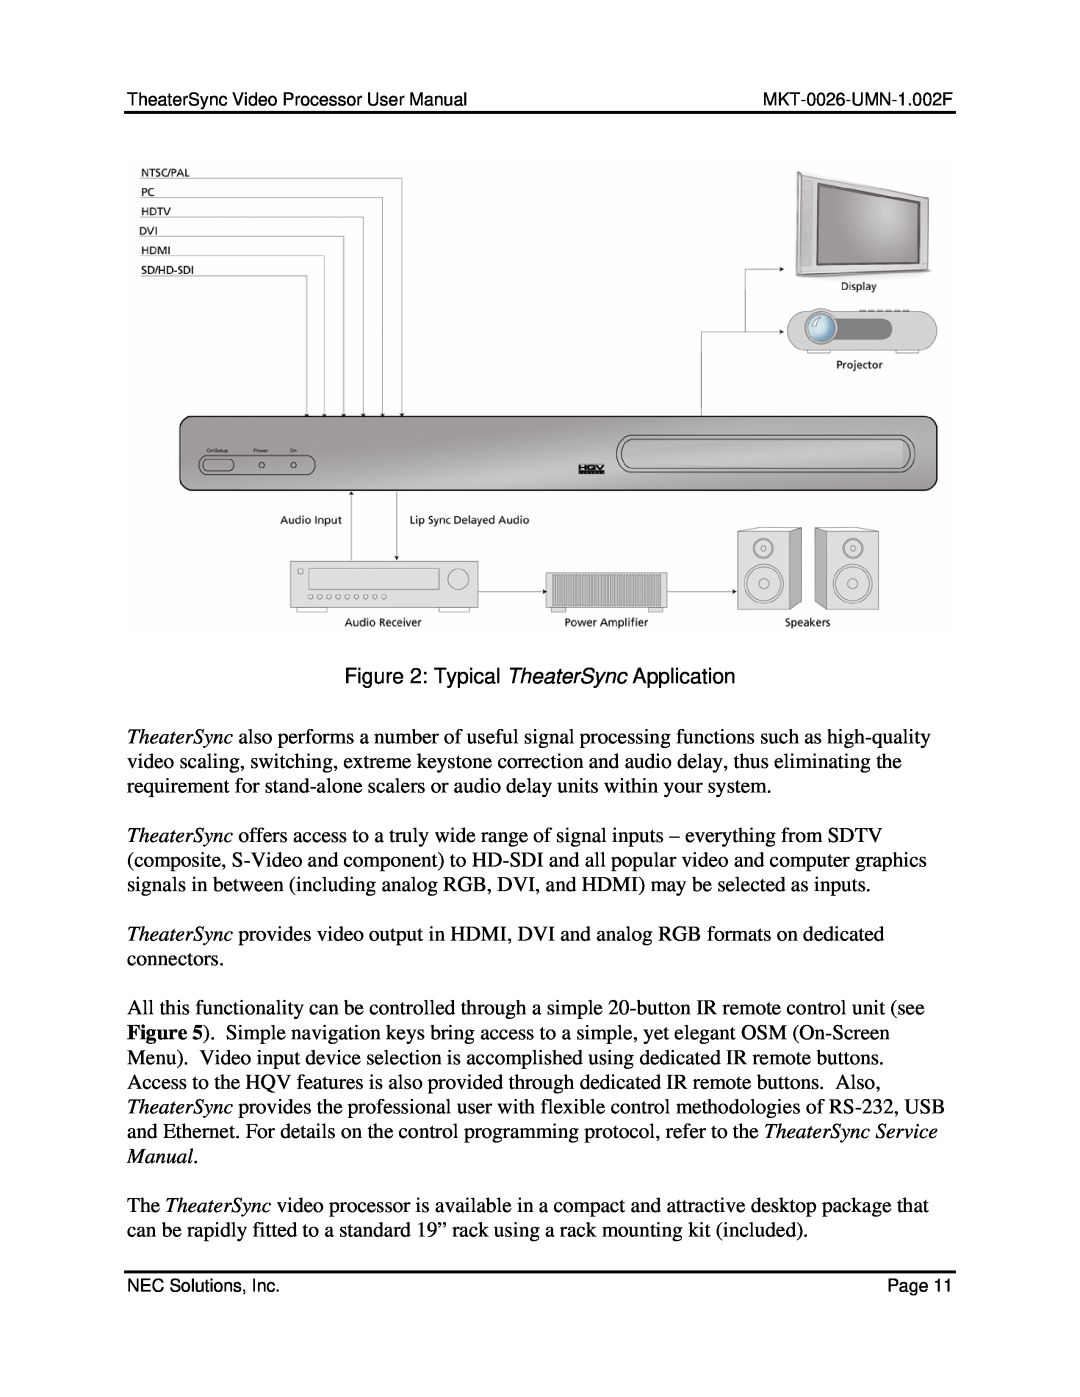 NEC TheaterSync Video Processor user manual Typical TheaterSync Application 